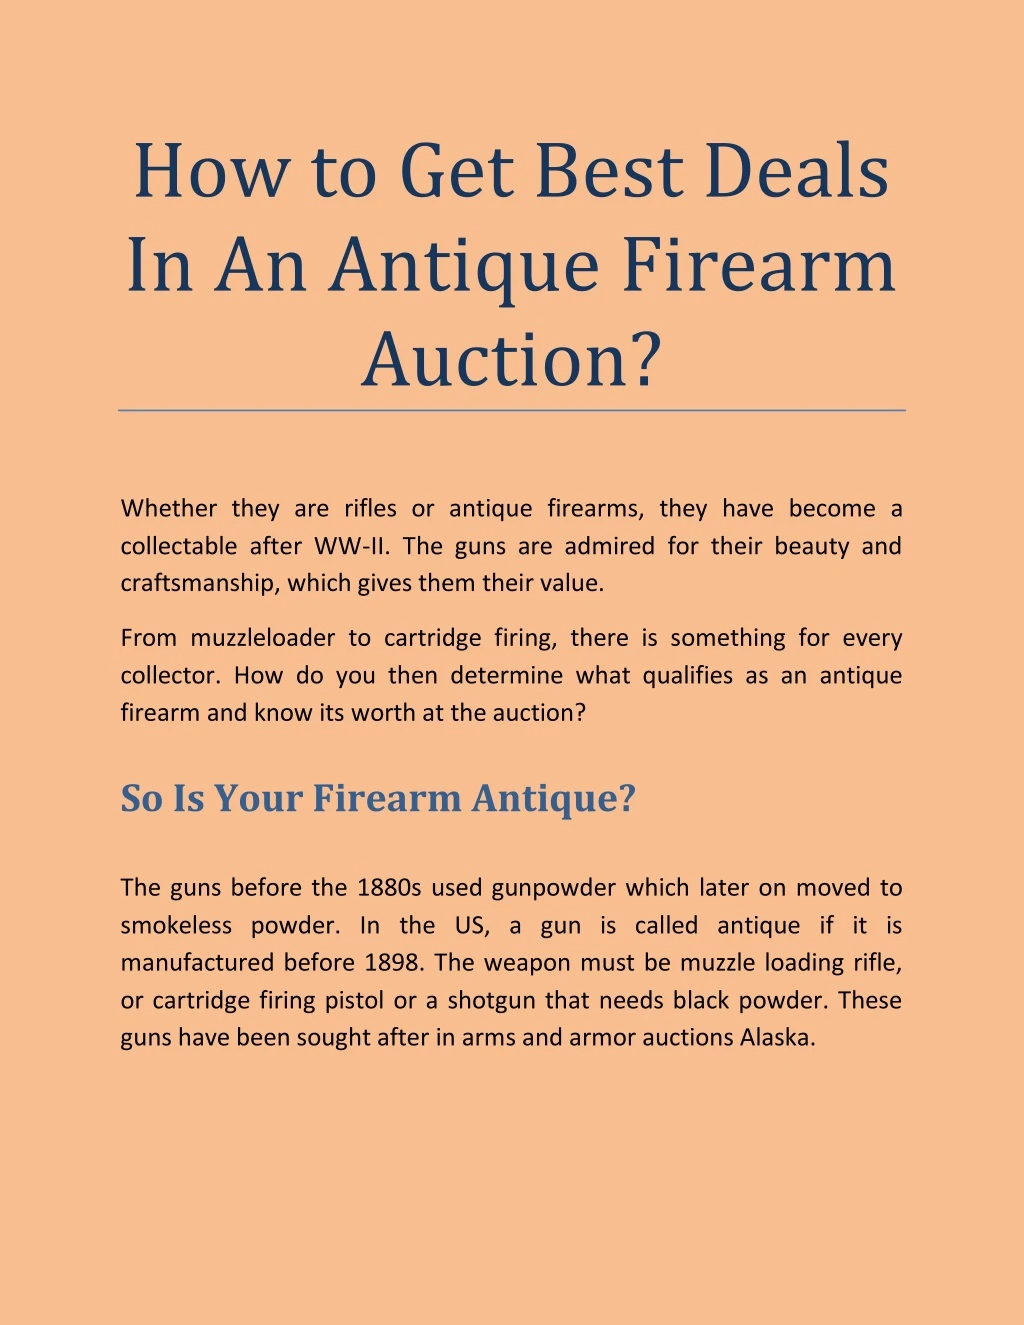 how to get best deals in an antique firearm